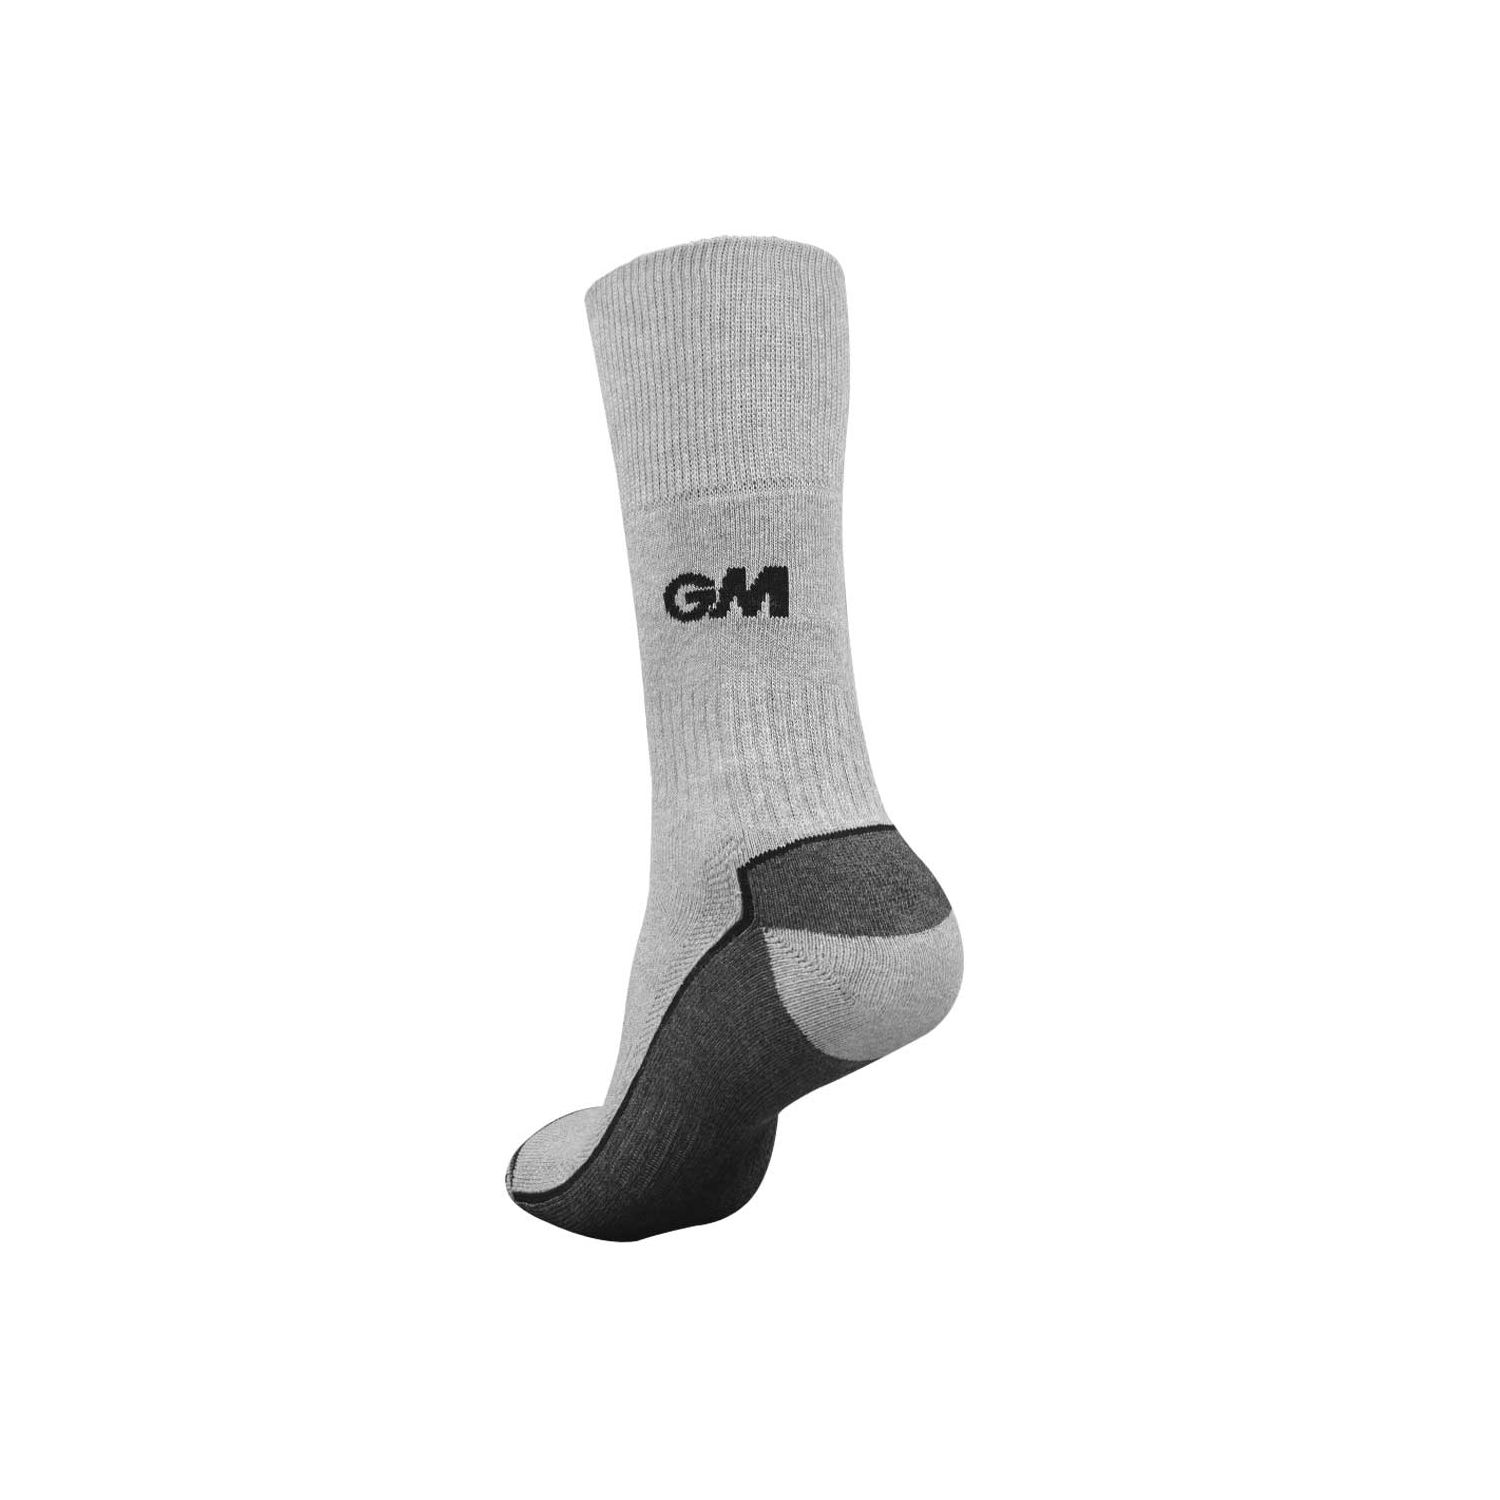 GM1 Cricket Socks Crew Size (Grey/Black)